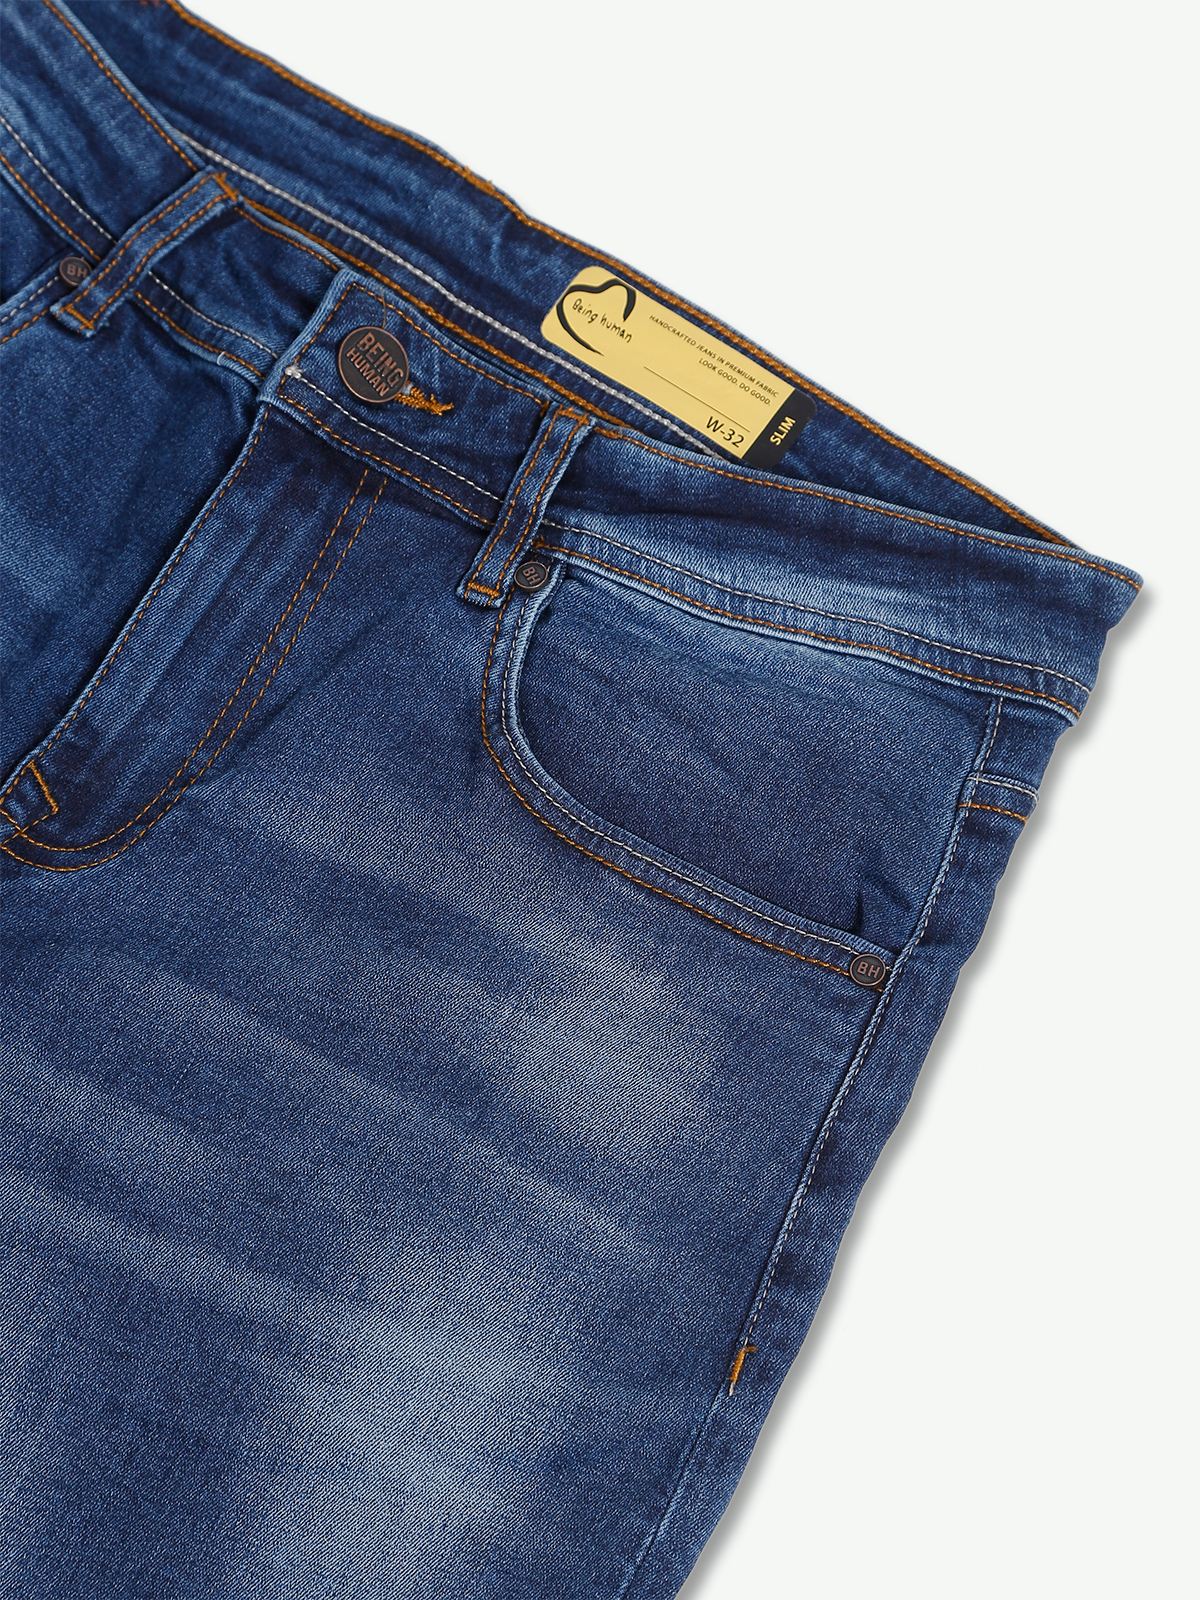 Splash Fashions Bangladesh - Being Human Skinny Fit Full-Length Mid Waist  Jeans with Pocket Detail Price: BDT 6390 Type : Denim Design : Plain Wash :  Black Material : 98% Cotton, 2%